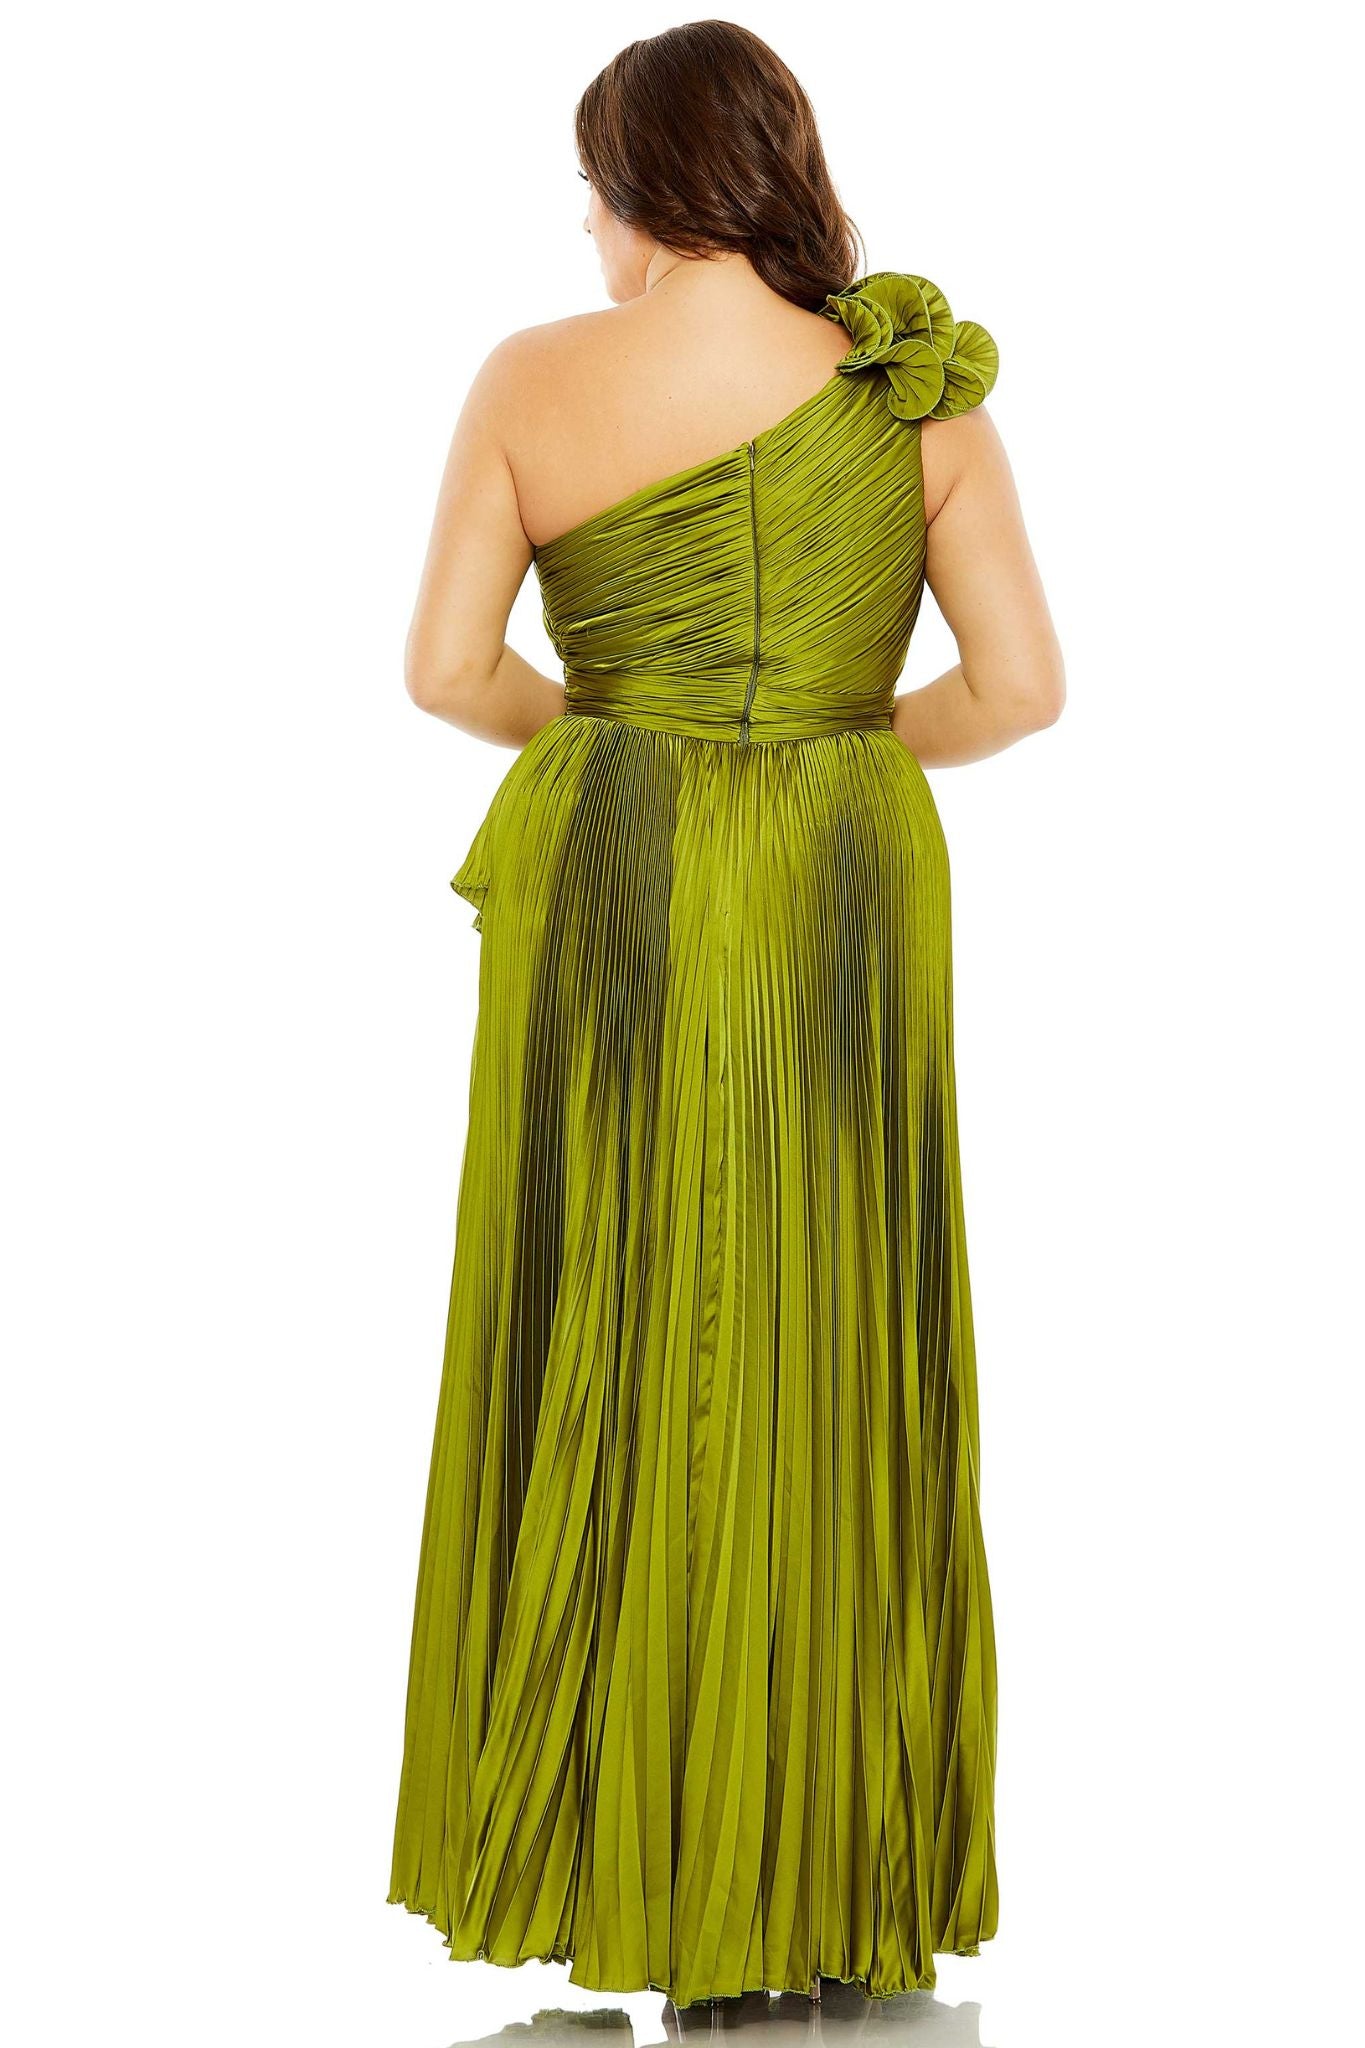 Amara One-Shoulder Gown in Apple Green by Mac Duggal - RENTAL